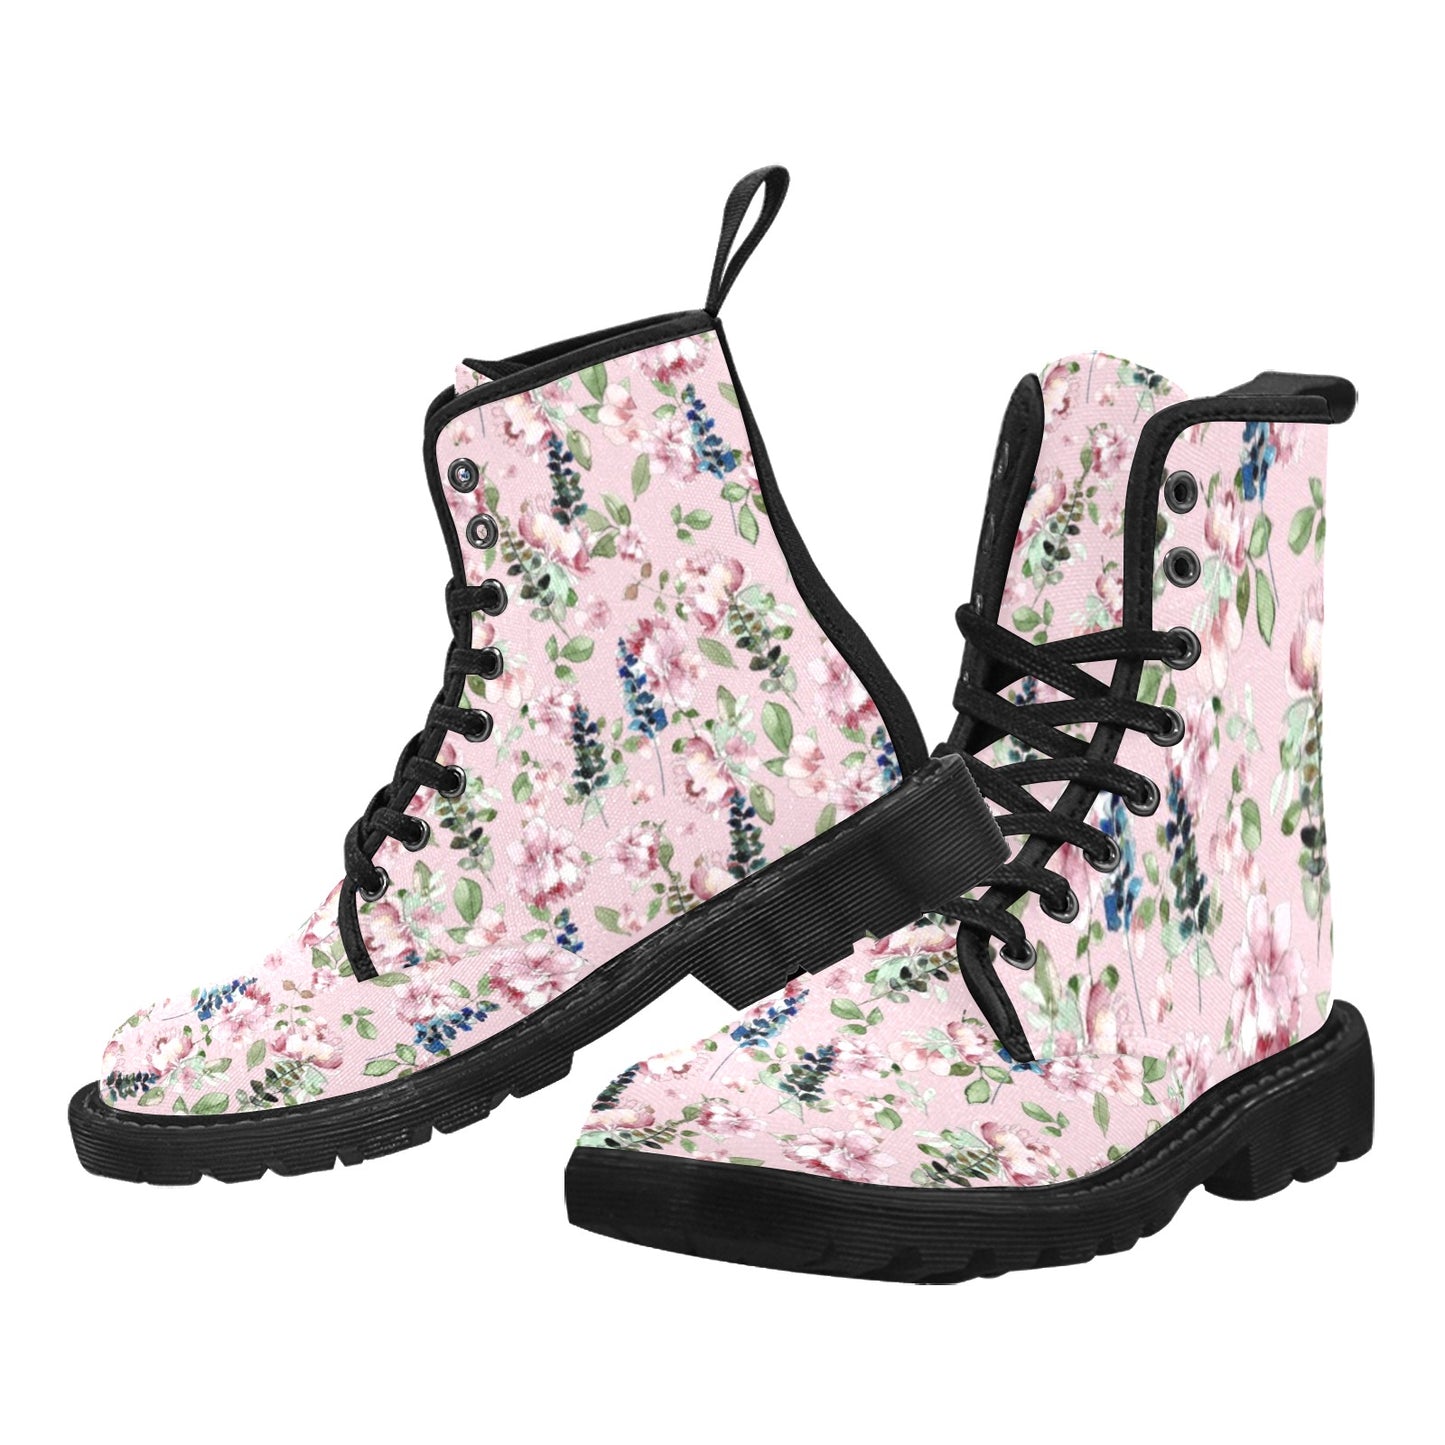 Indigo Flow Boots for Women - Pink